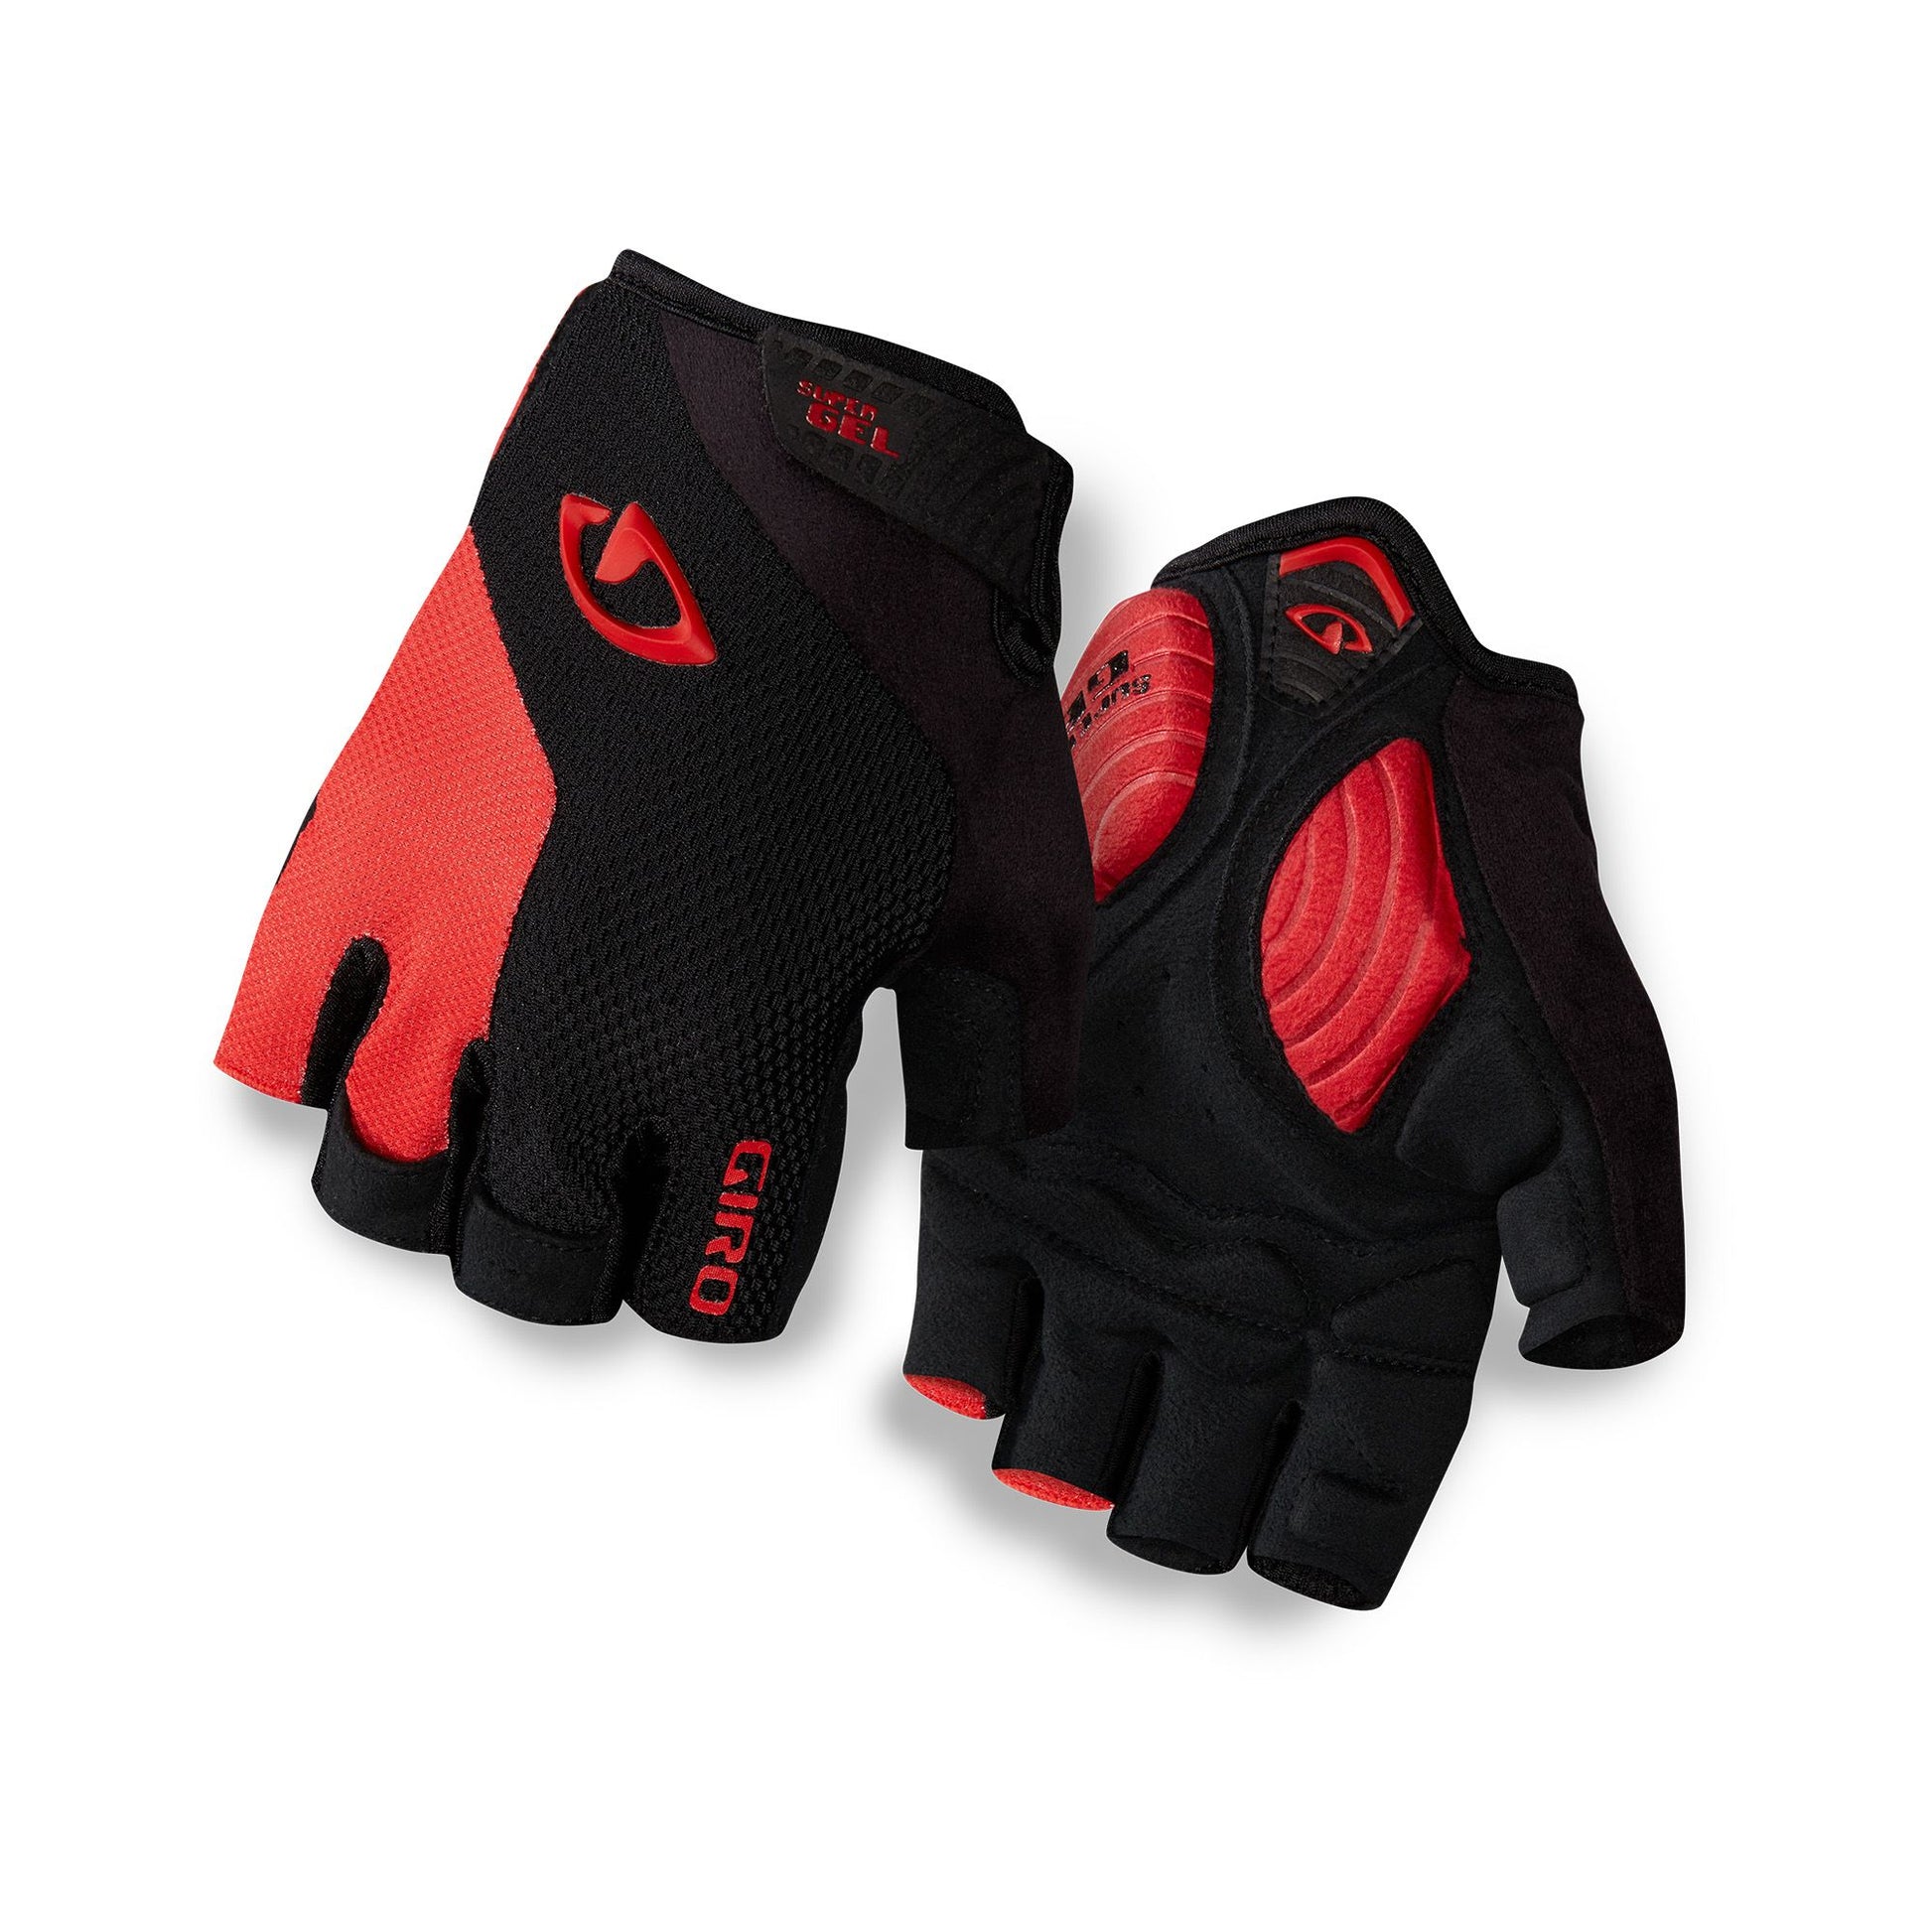 Giro Men's Strade Dure SG Glove Black/Bright Red Bike Gloves